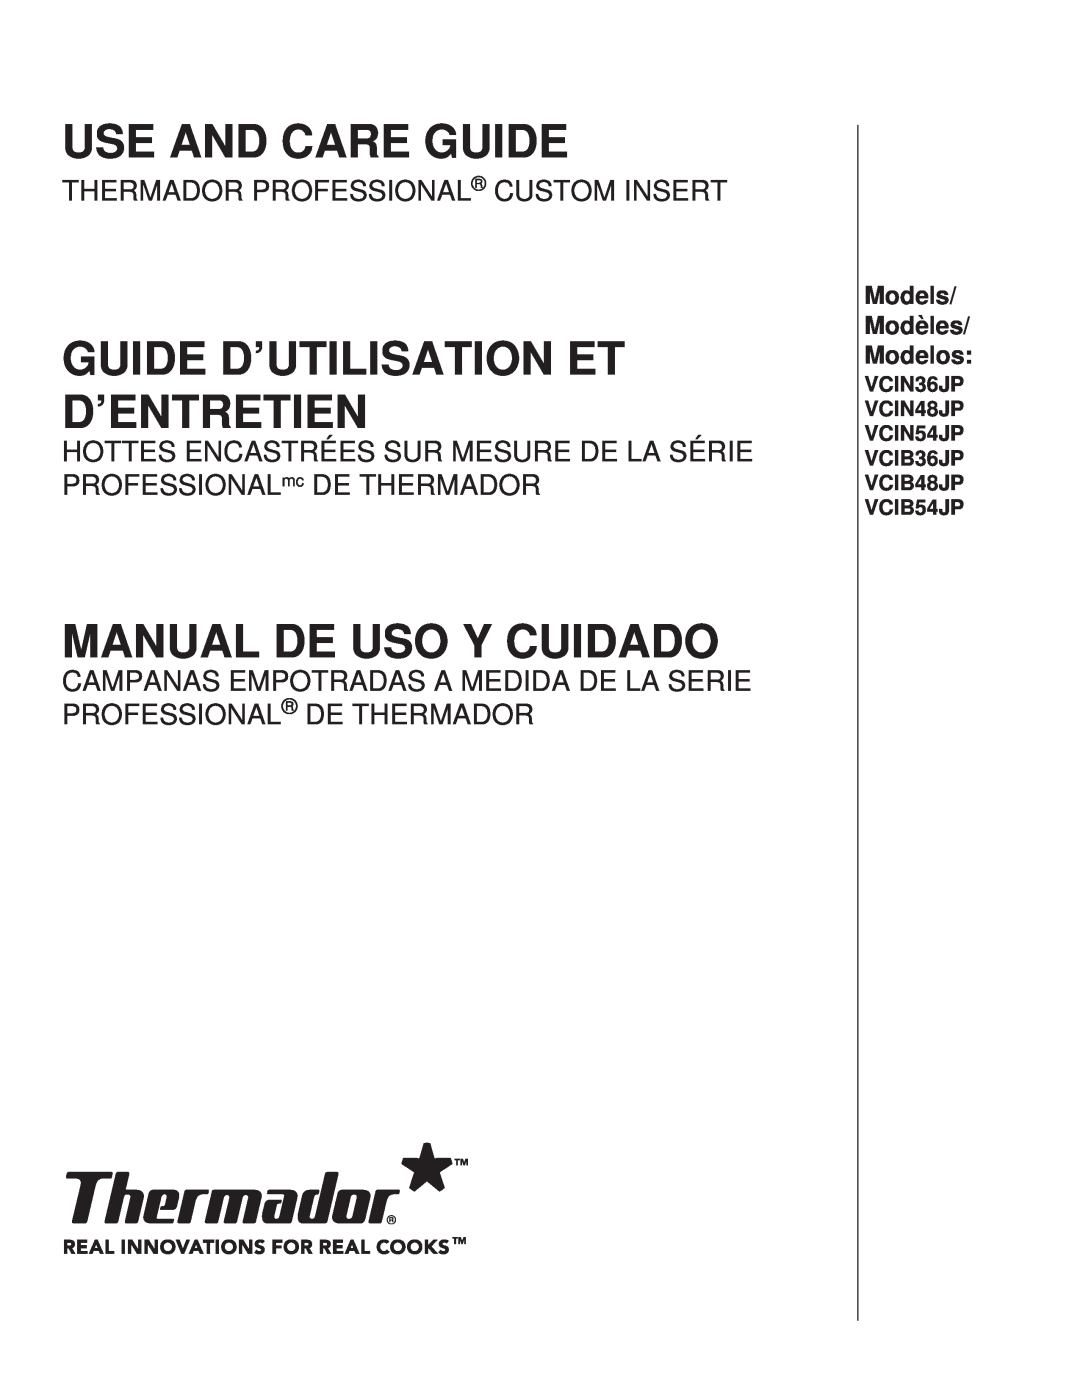 Thermador VCIB48JP, VCIN48JP manual Use And Care Guide, Guide D’Utilisation Et D’Entretien, Manual De Uso Y Cuidado 